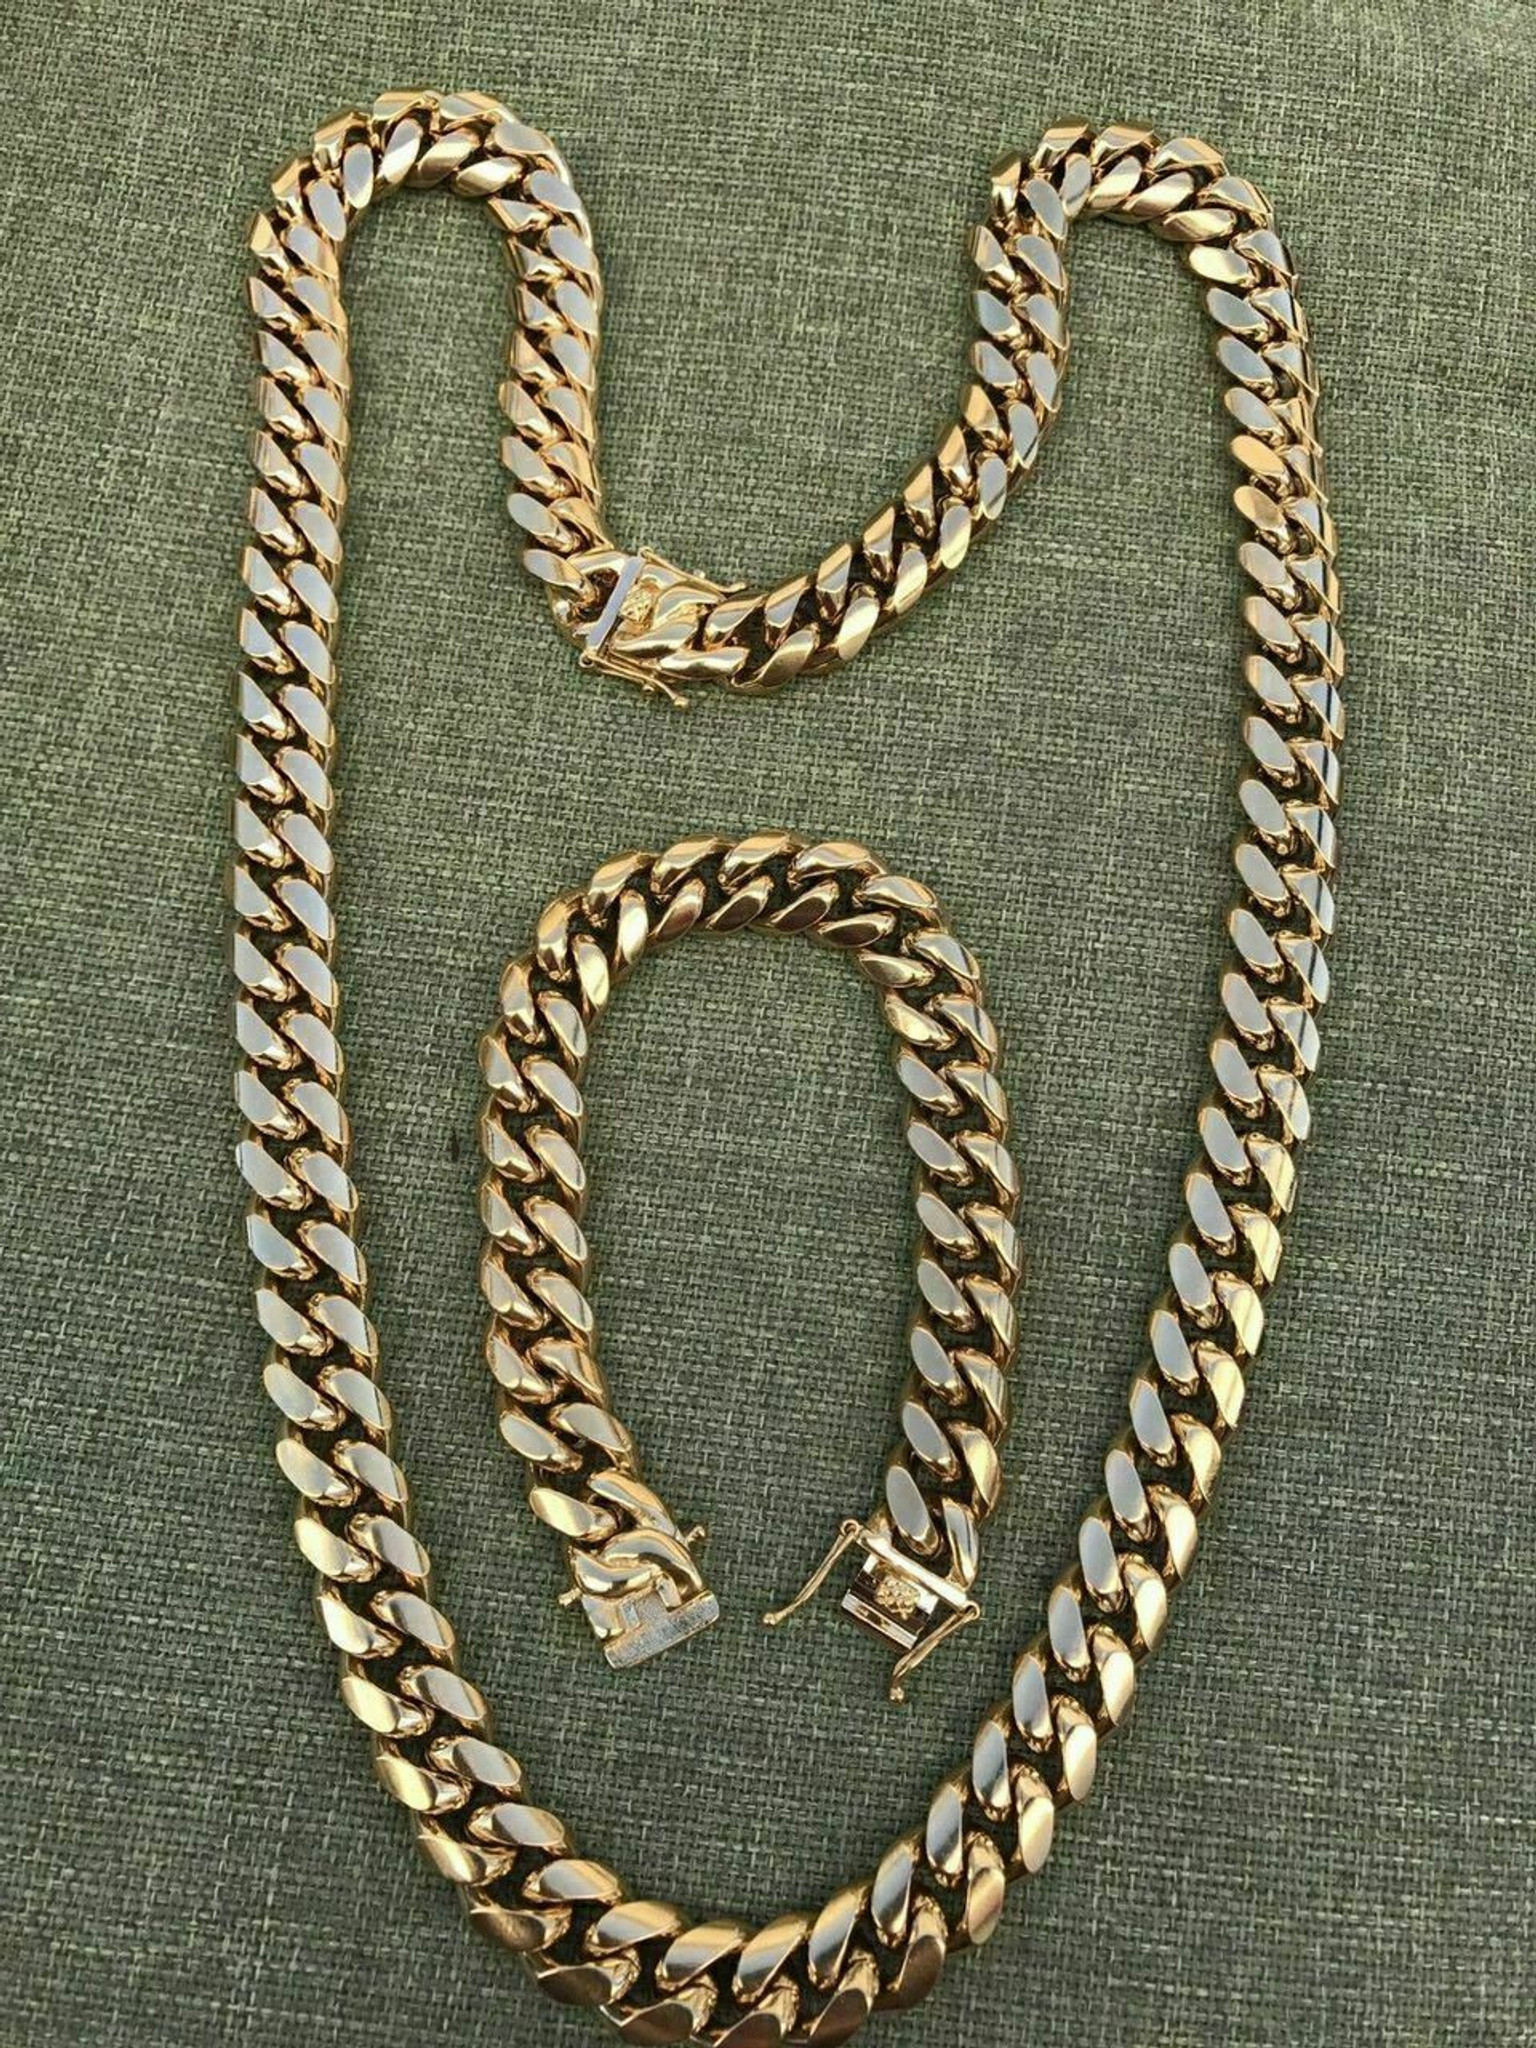 Twistedpendant Men's 18K Gold Cuban Link Bracelet